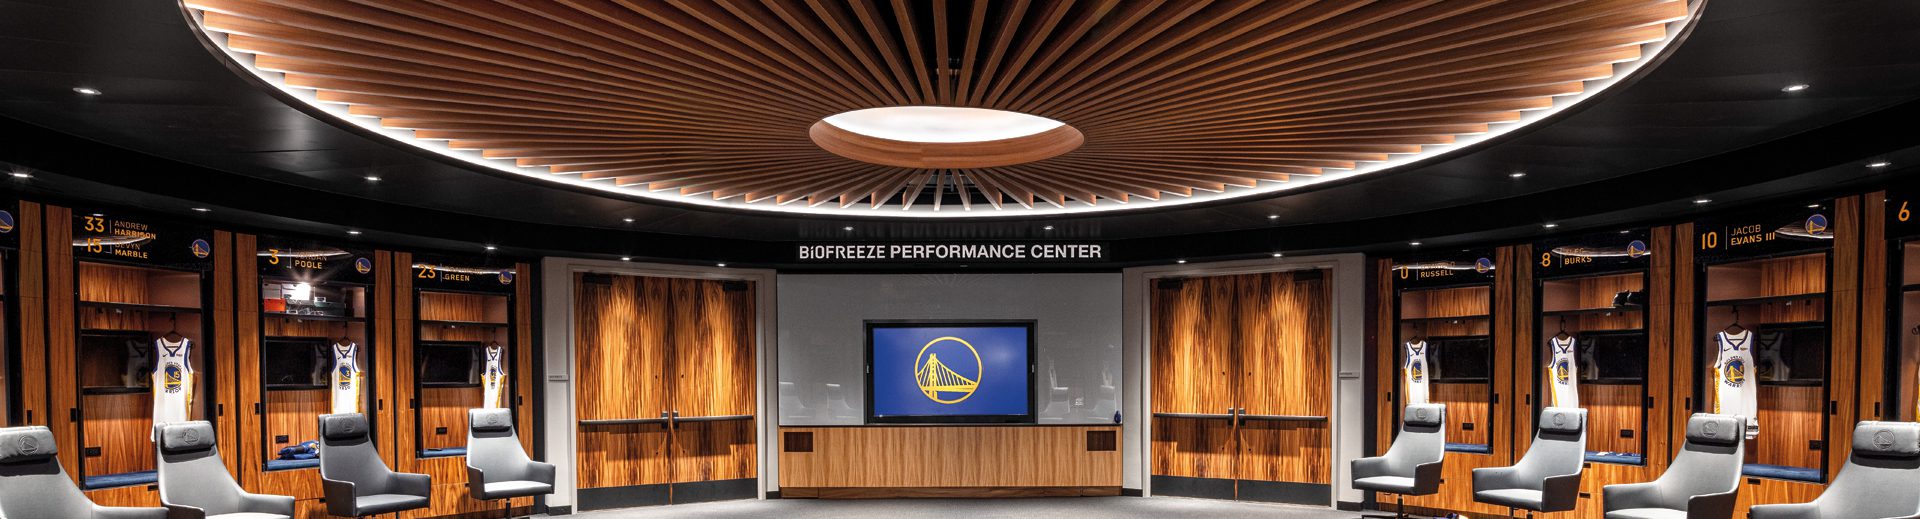 Biofreeze Performance Center_Locker Room_Credit Jason O’Rear Chase Center_Banner